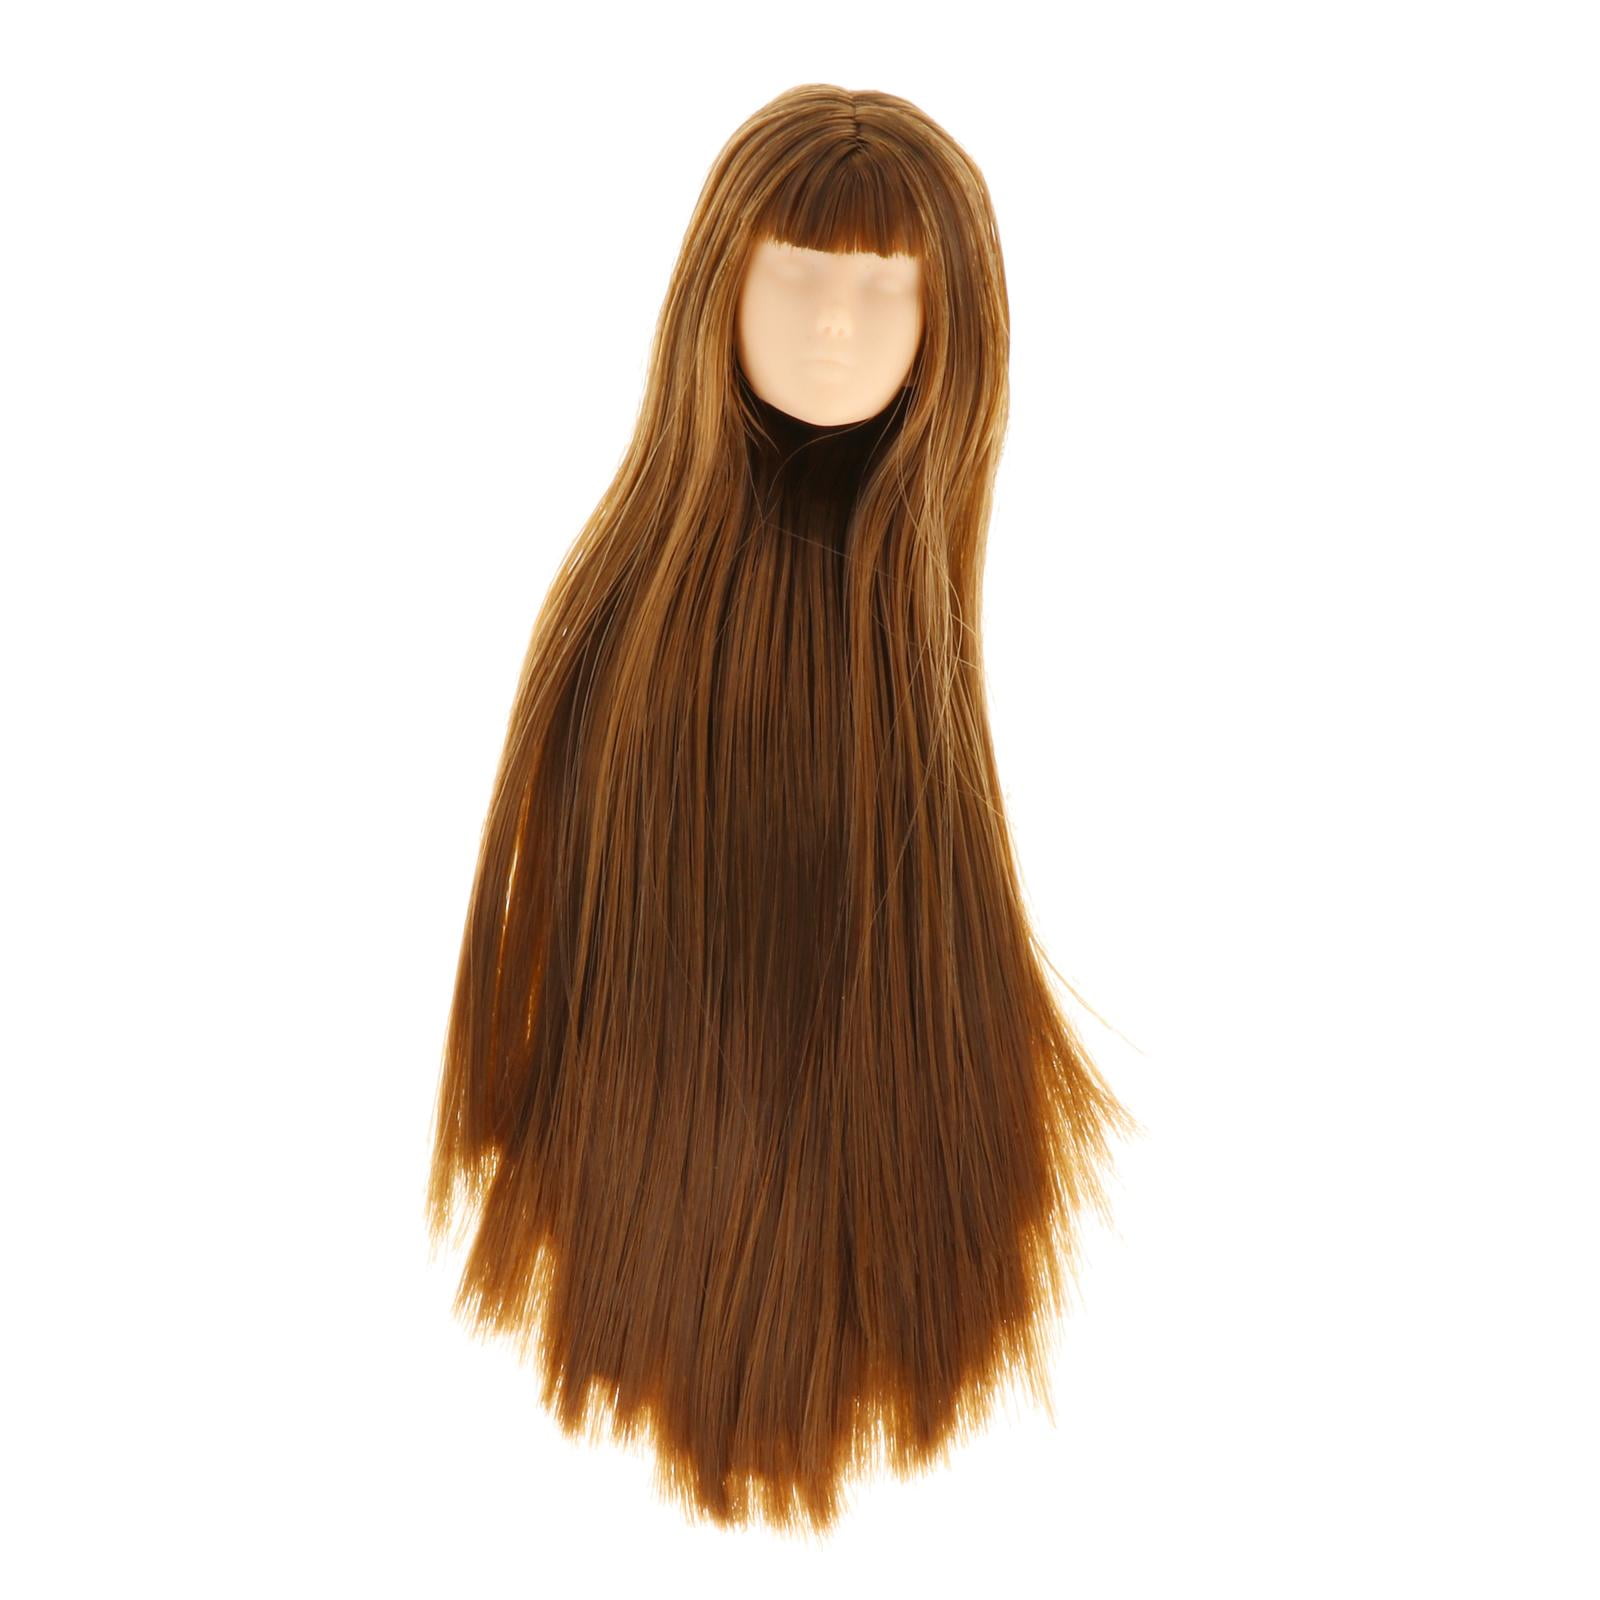 Head Sculpt Action Figure 1/6 Scale Long Hair Model Girl Accessory Parts